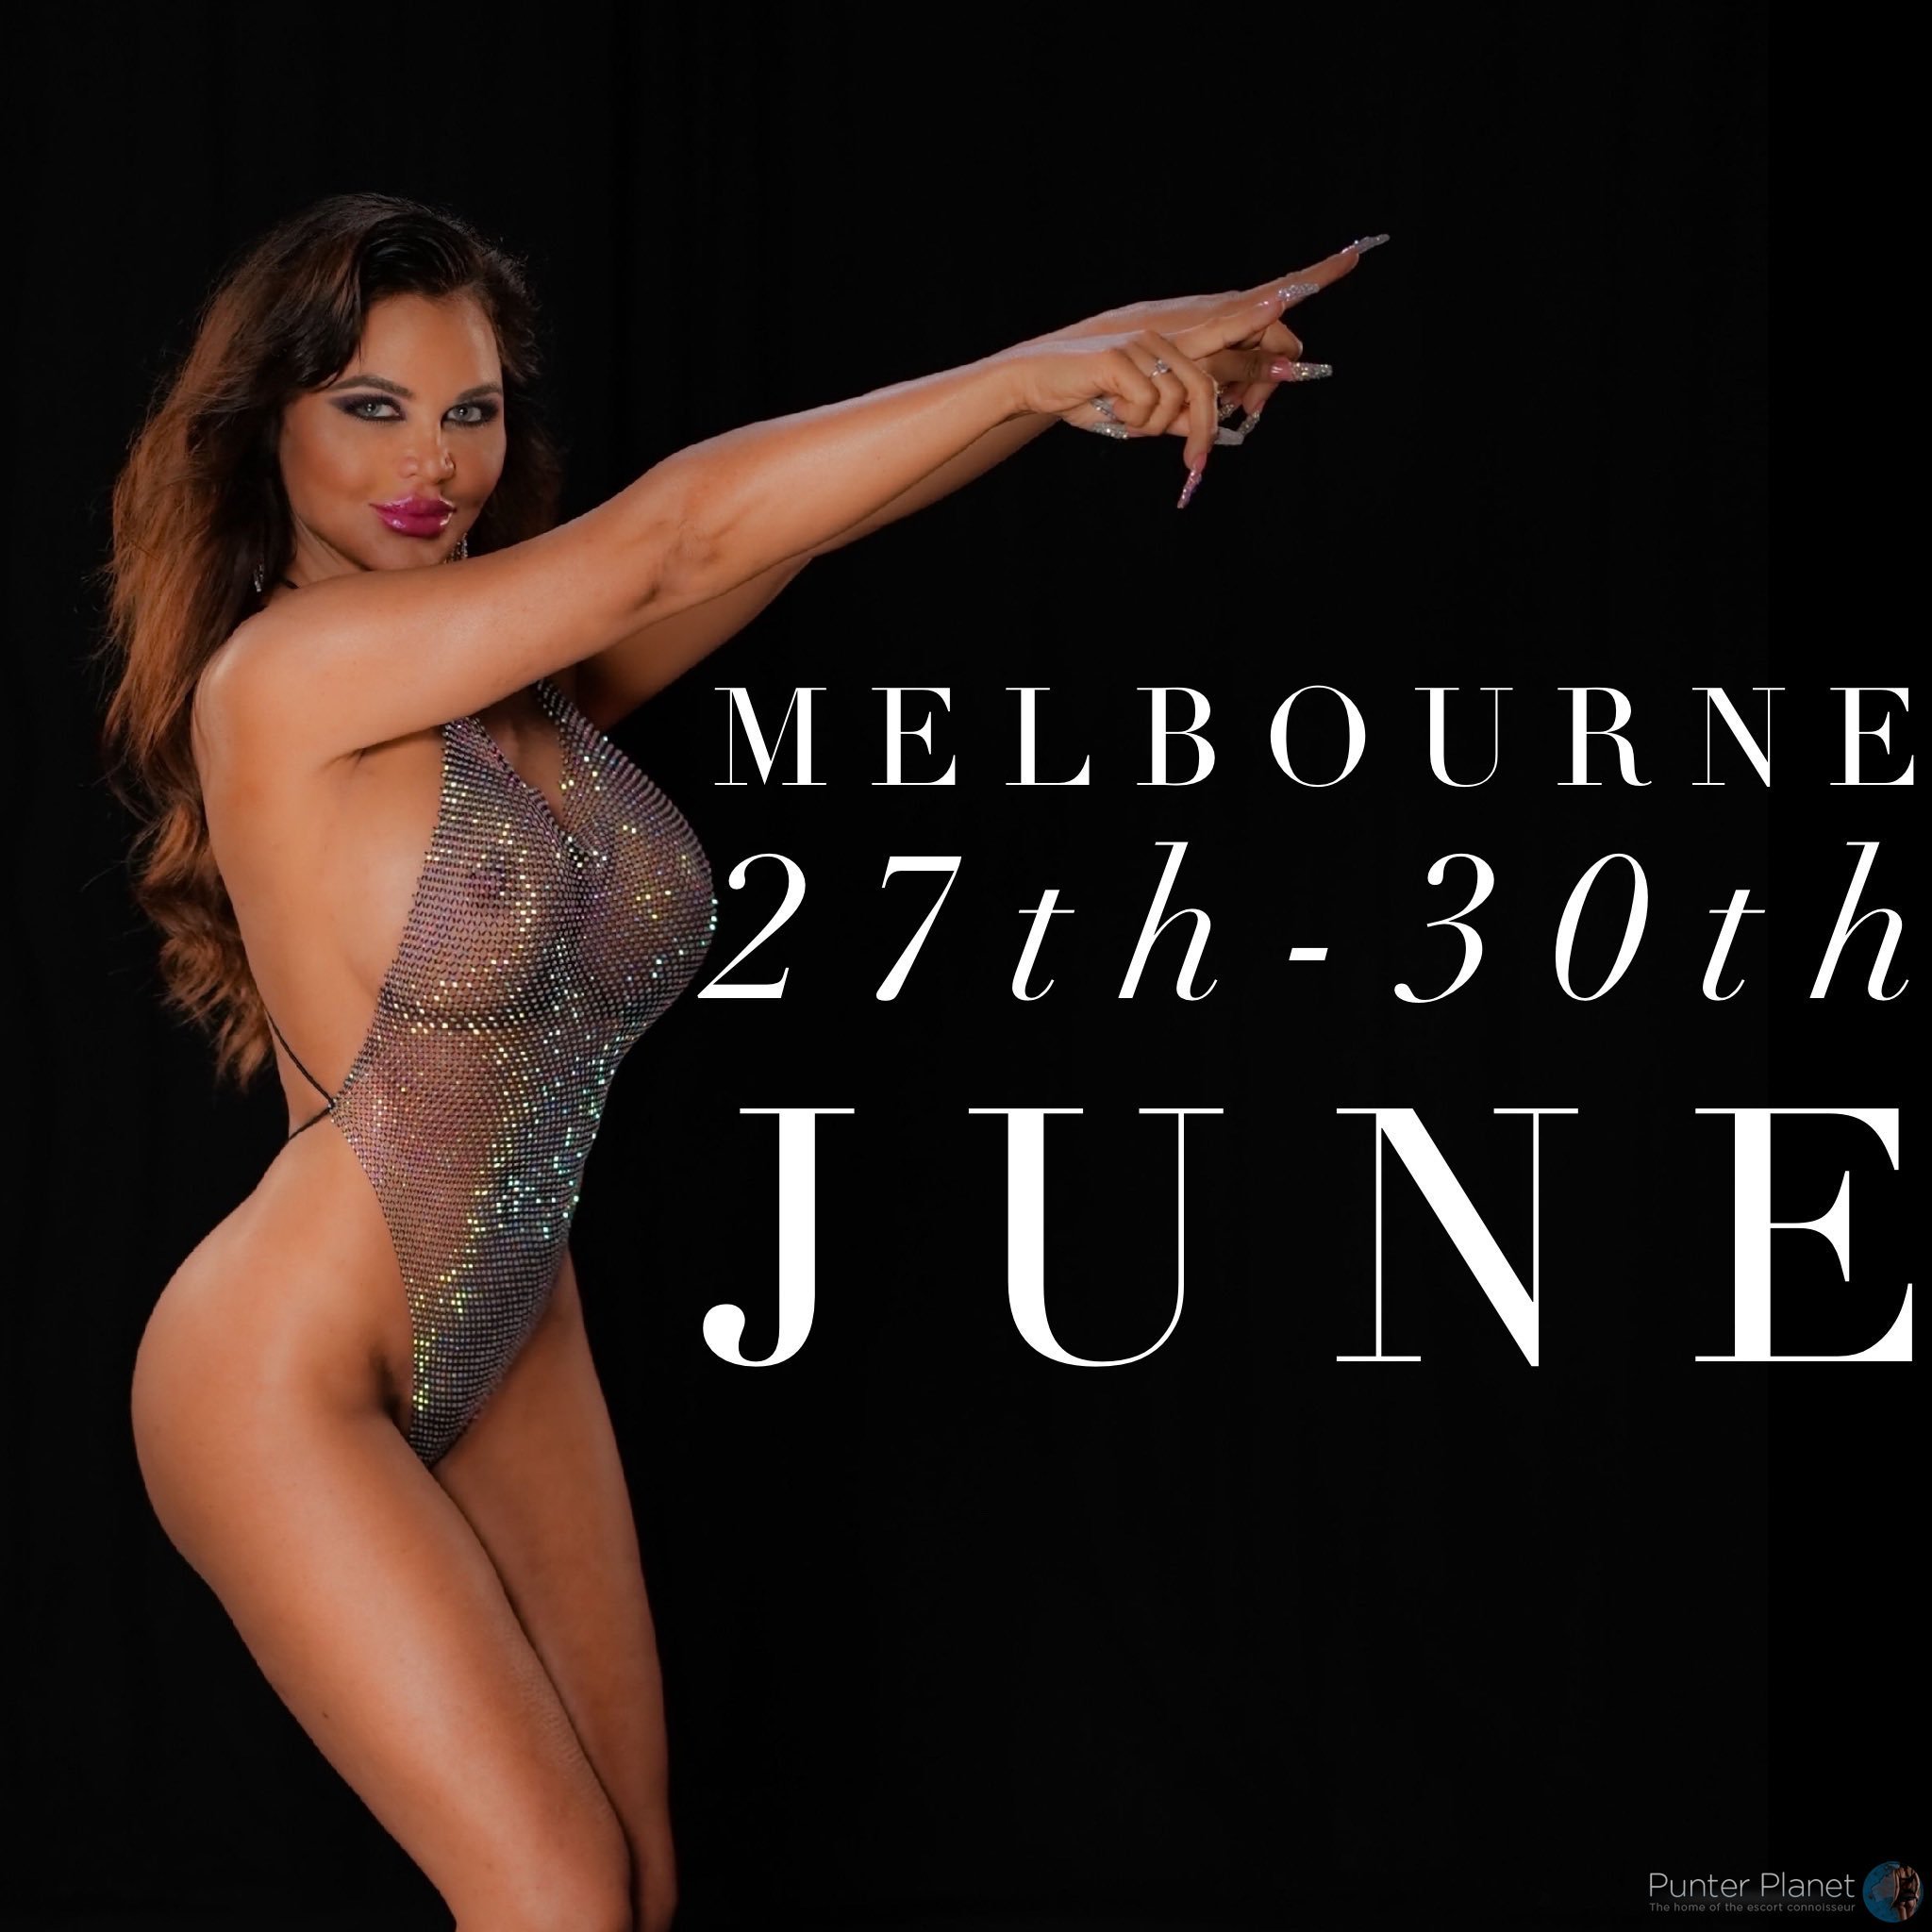 Christine McQueen visiting Melbourne 27th-30th June